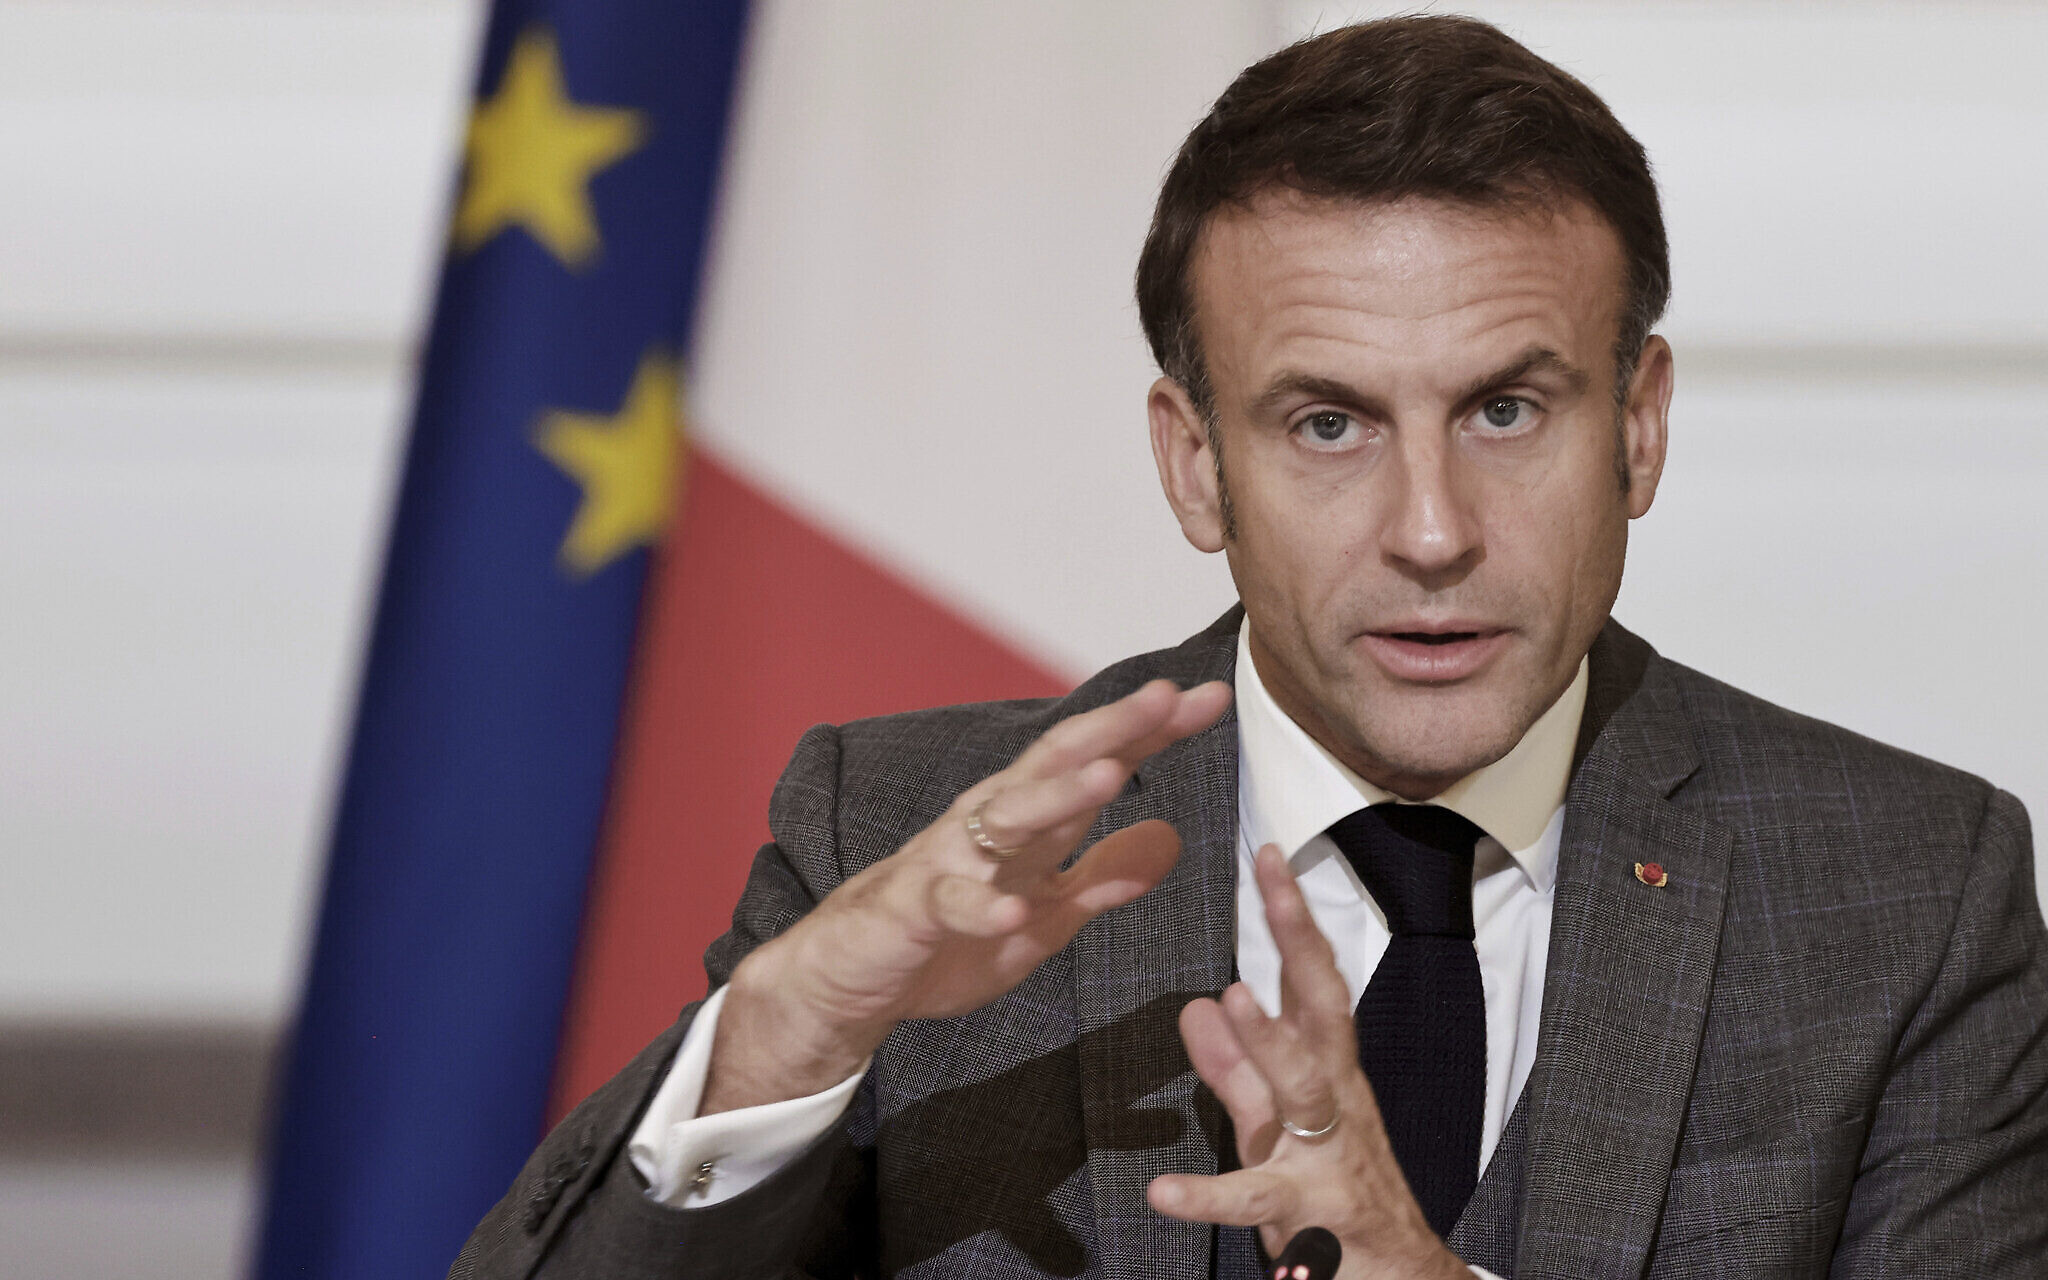 “EU far from admitting Ukraine” — Macron